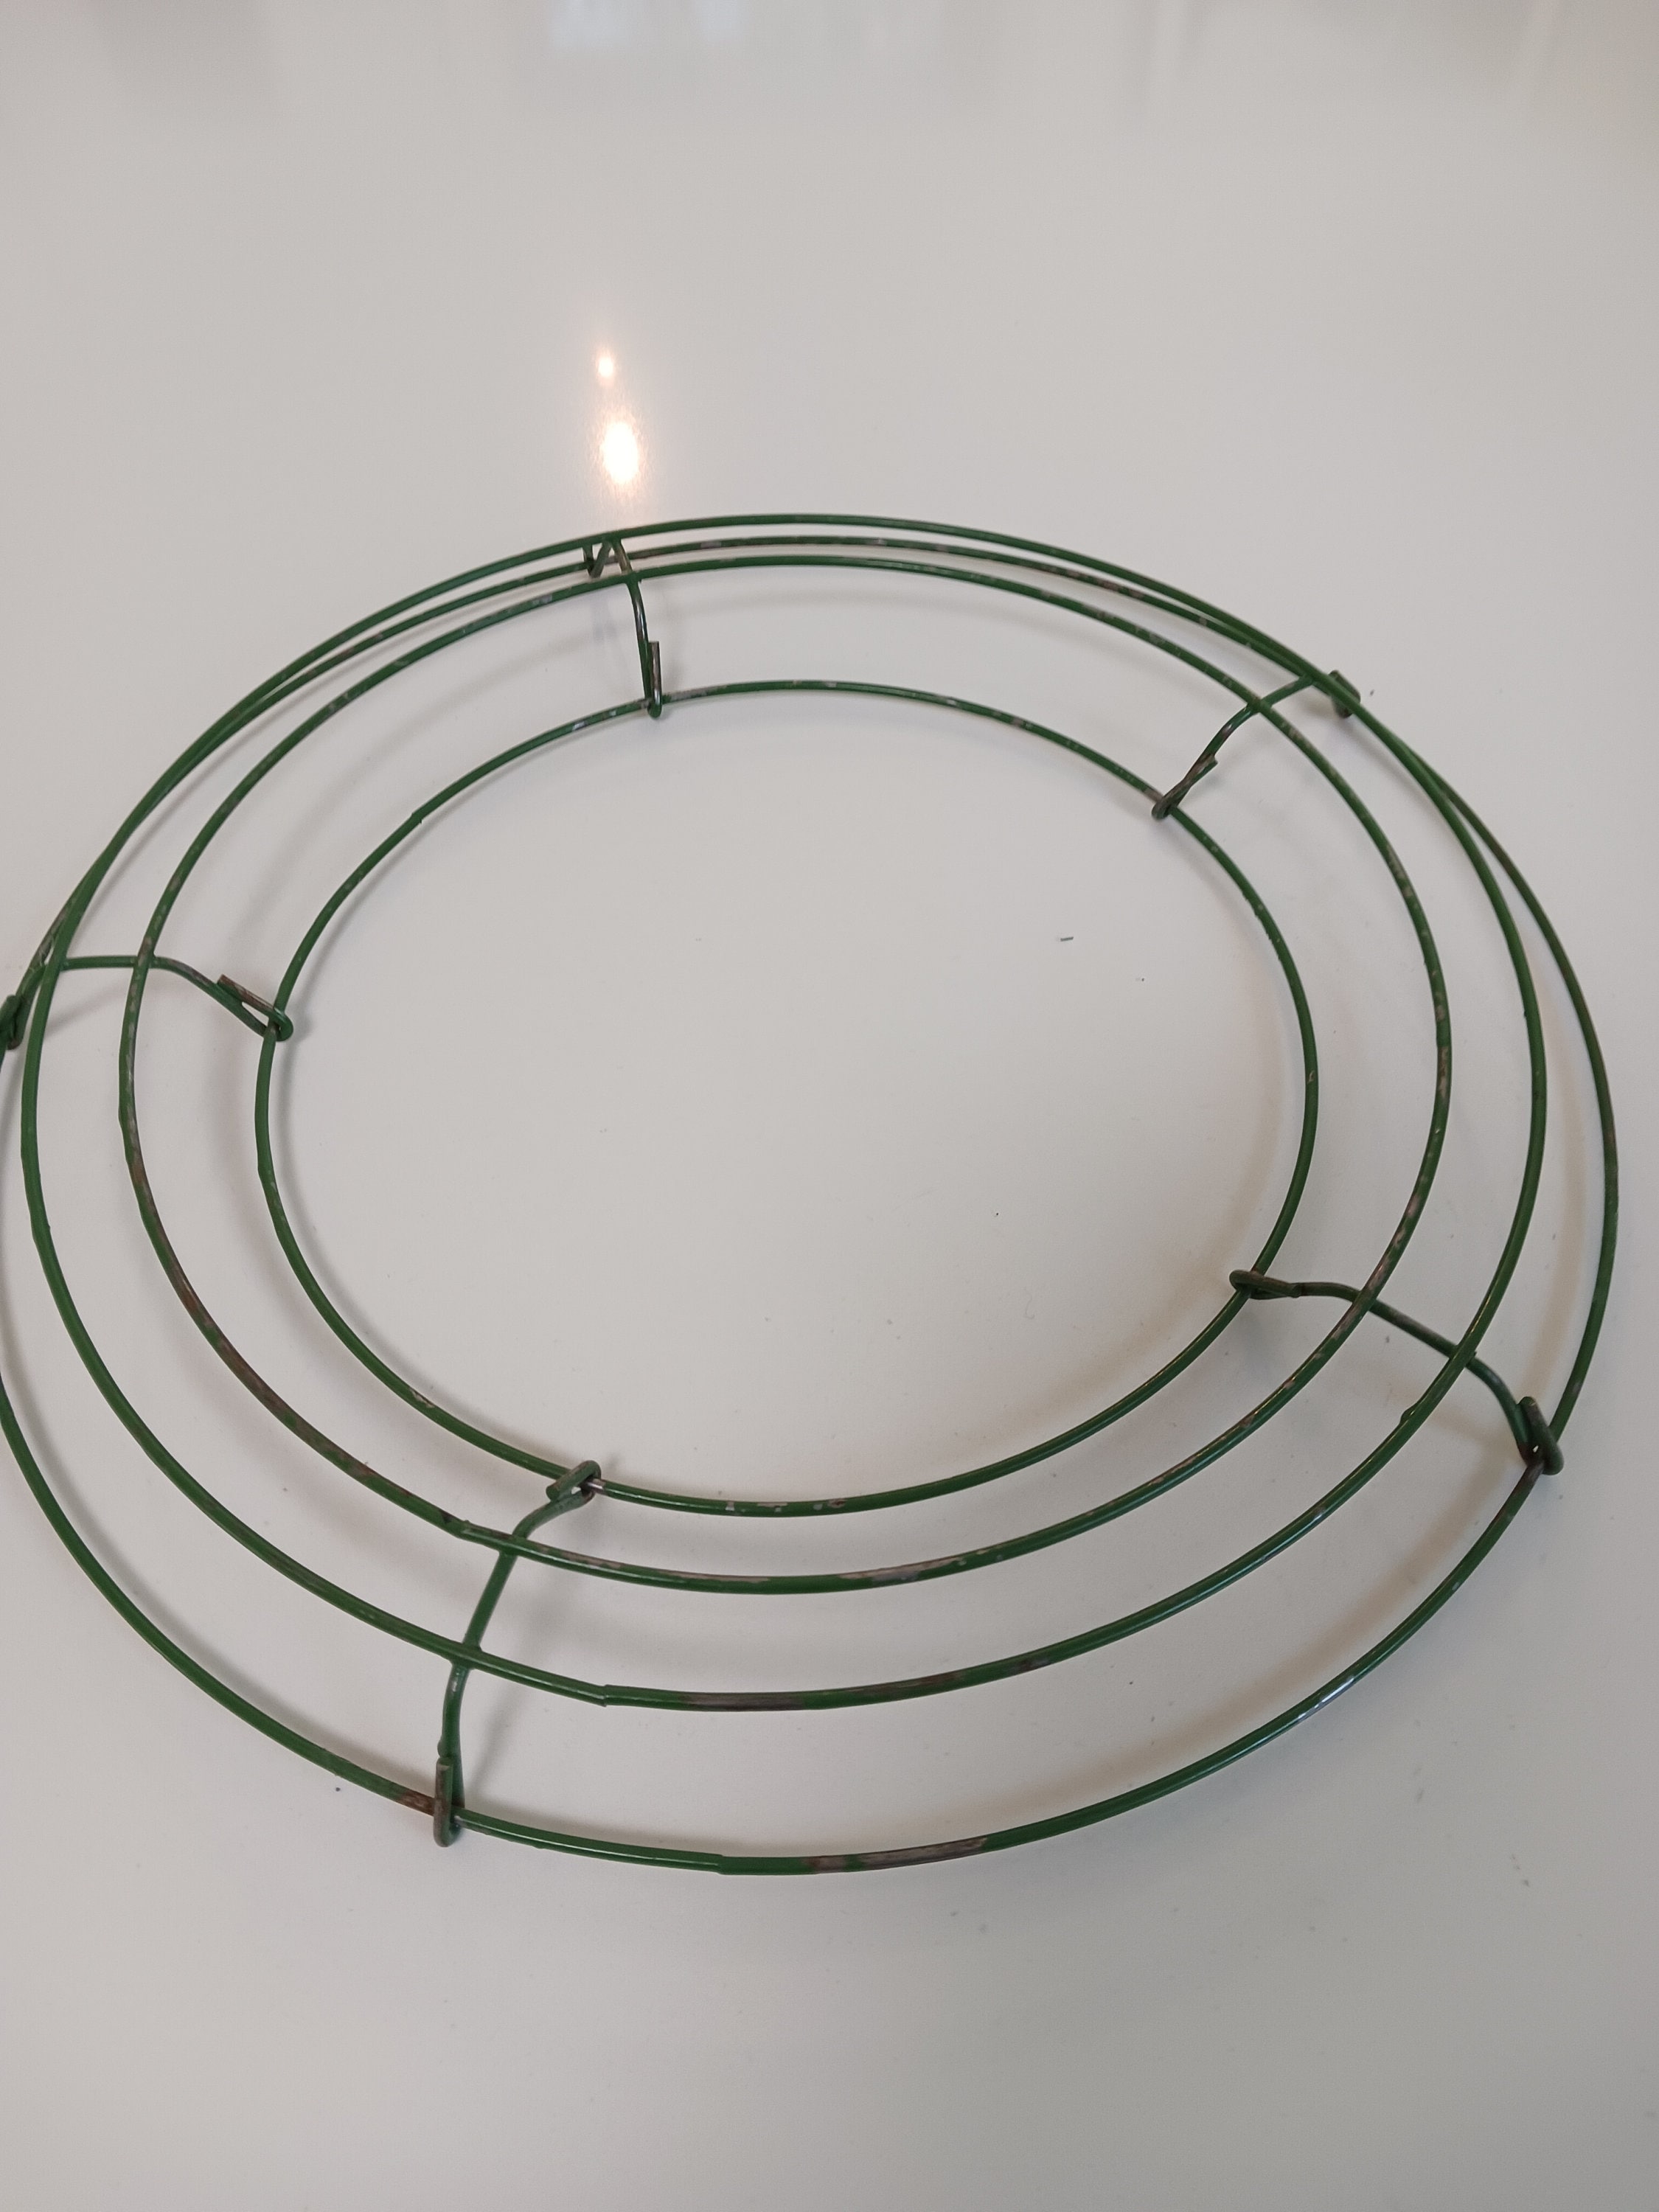 10-inch Plain Wire Wreath Form: 3 Wire Black Frames MD005202